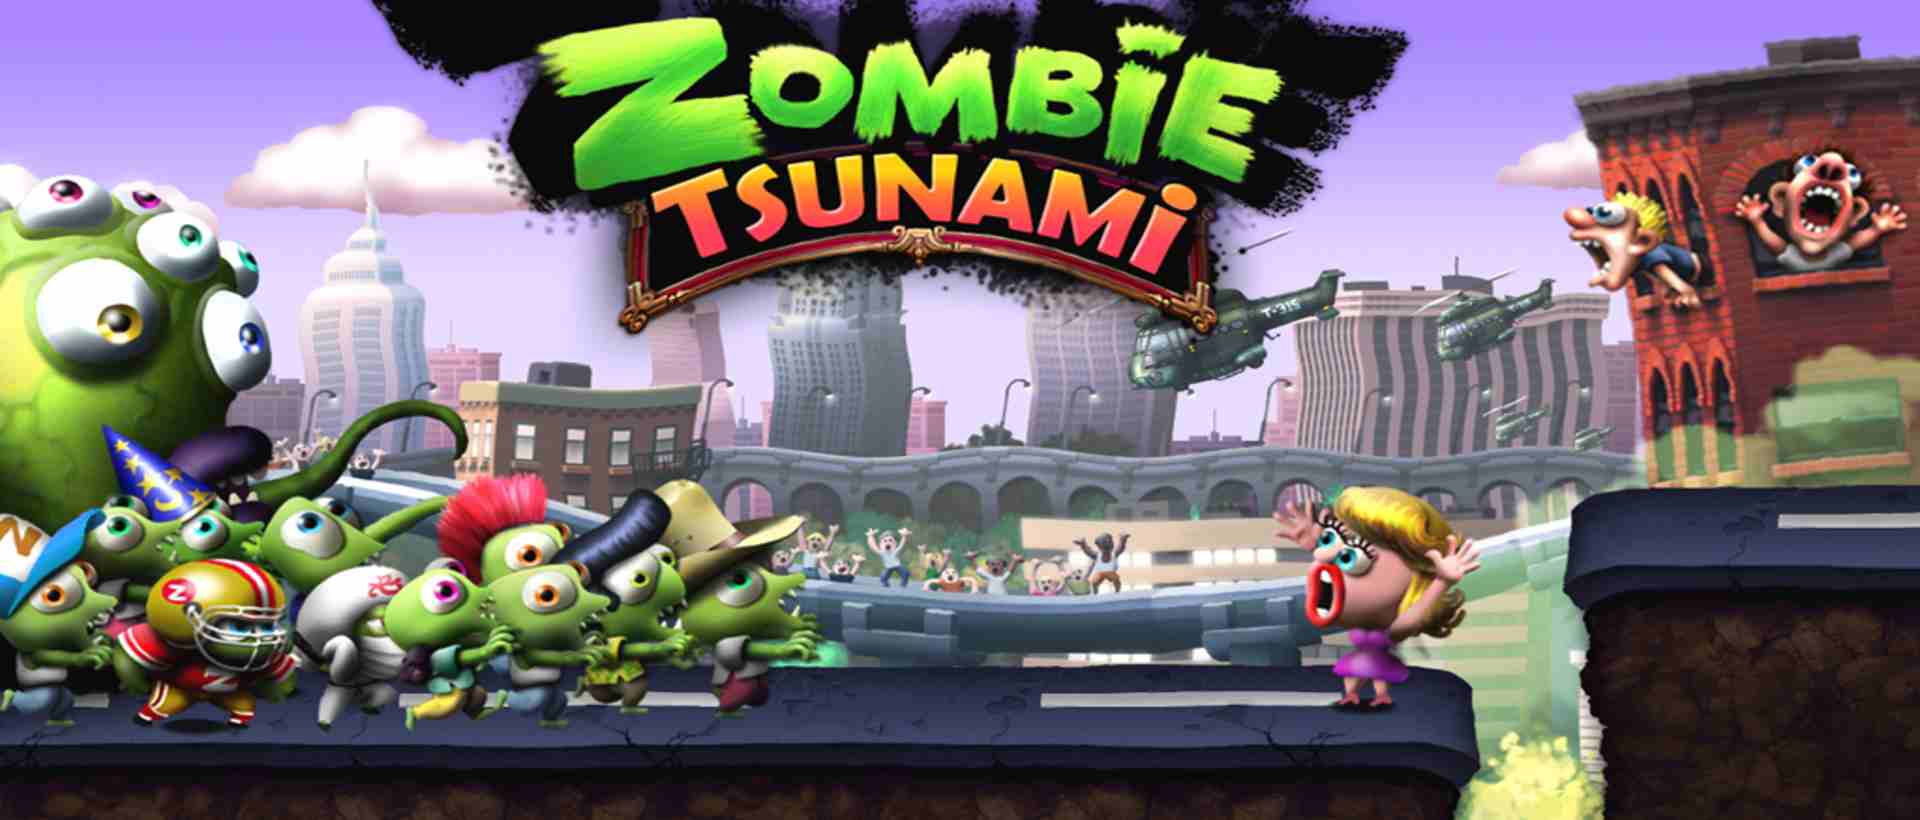 Zombie Tsunami MOD (Pro Menu, Infinite Money, Features, Max Level, No Death) APK 4.5.133